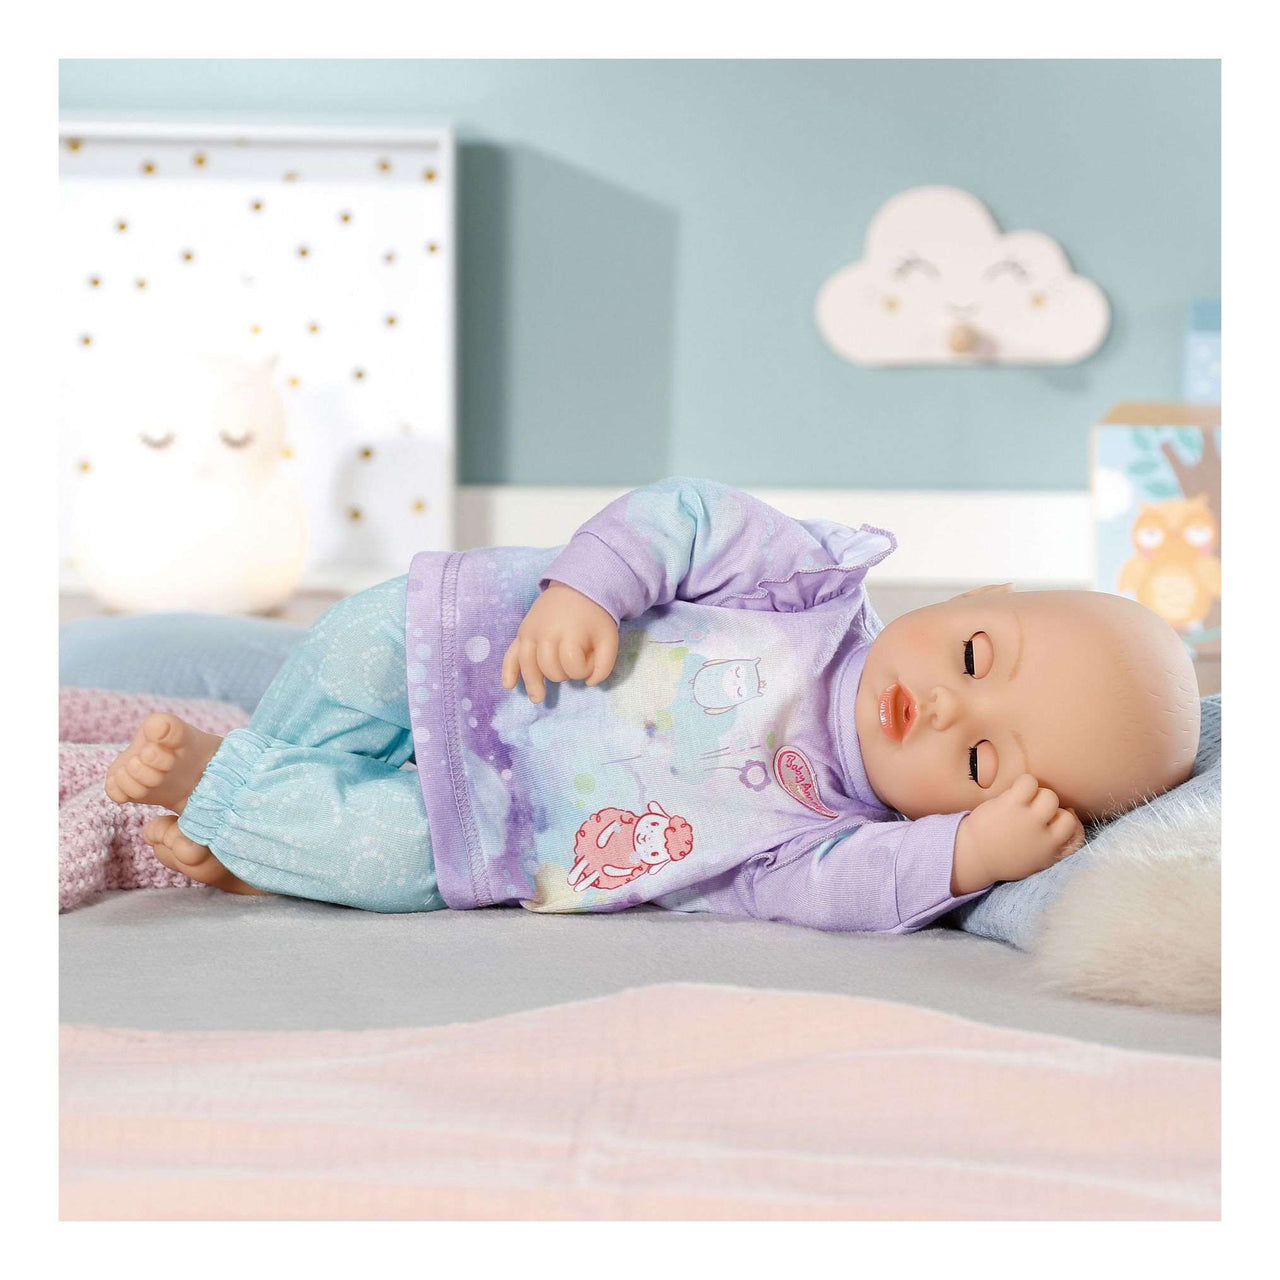 Baby Annabell Sweet Dreams Nightwear 43cm Baby Annabell